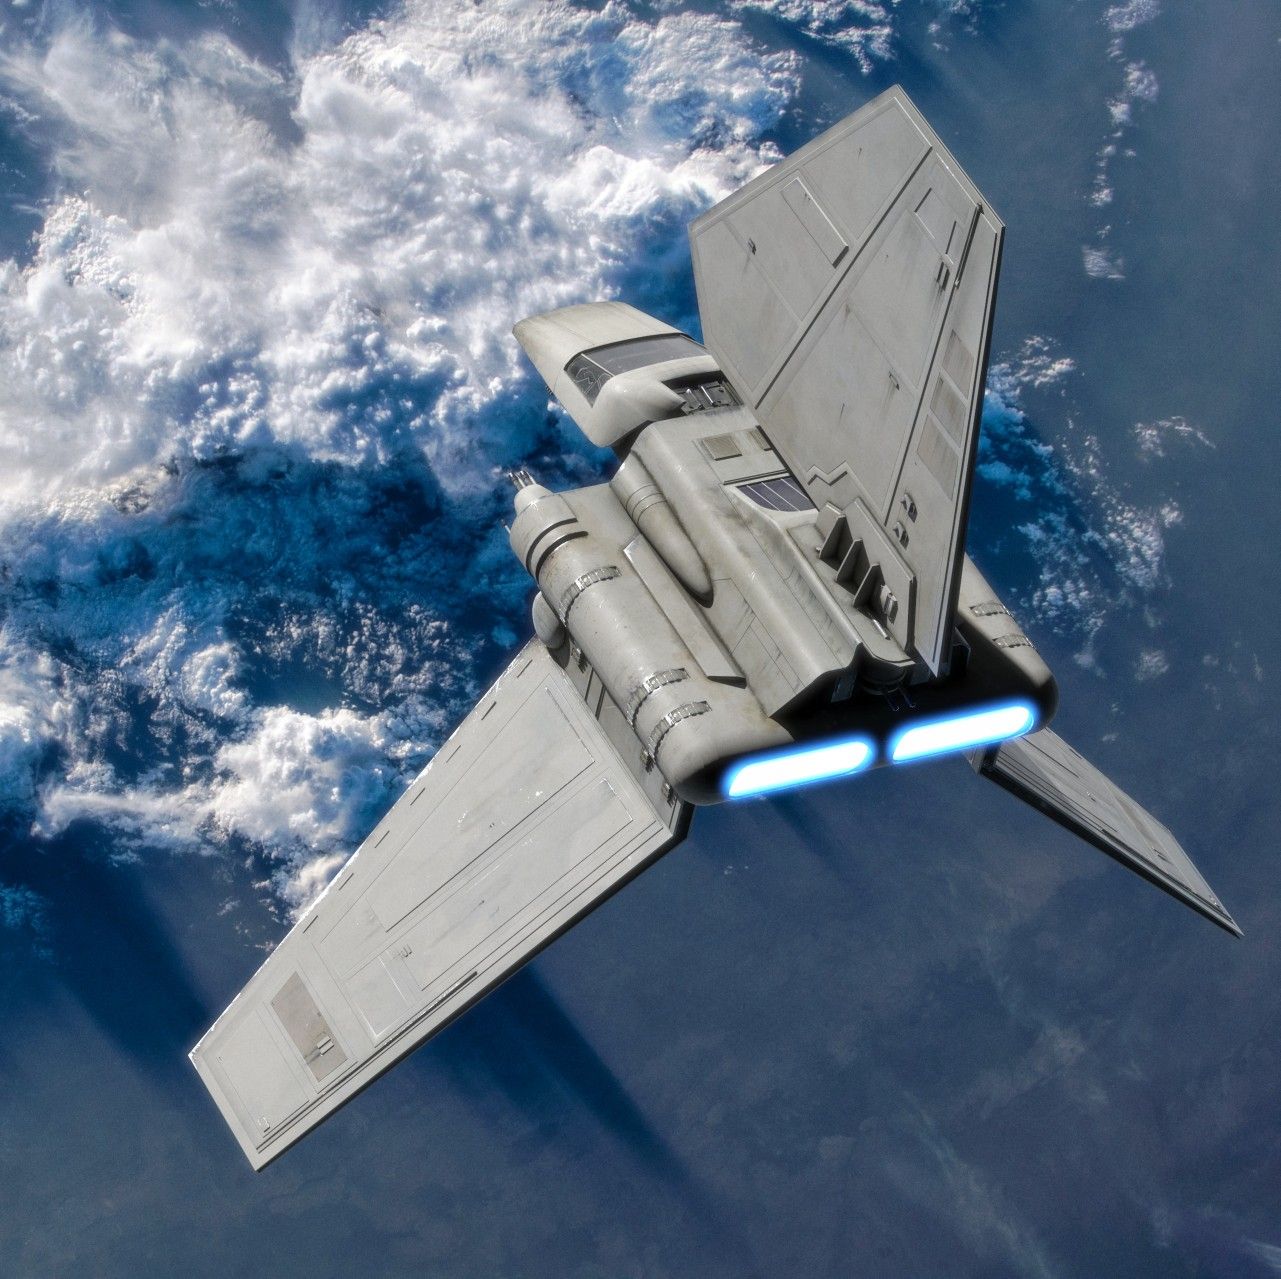 Star Wars #starwars imperial shuttle .com